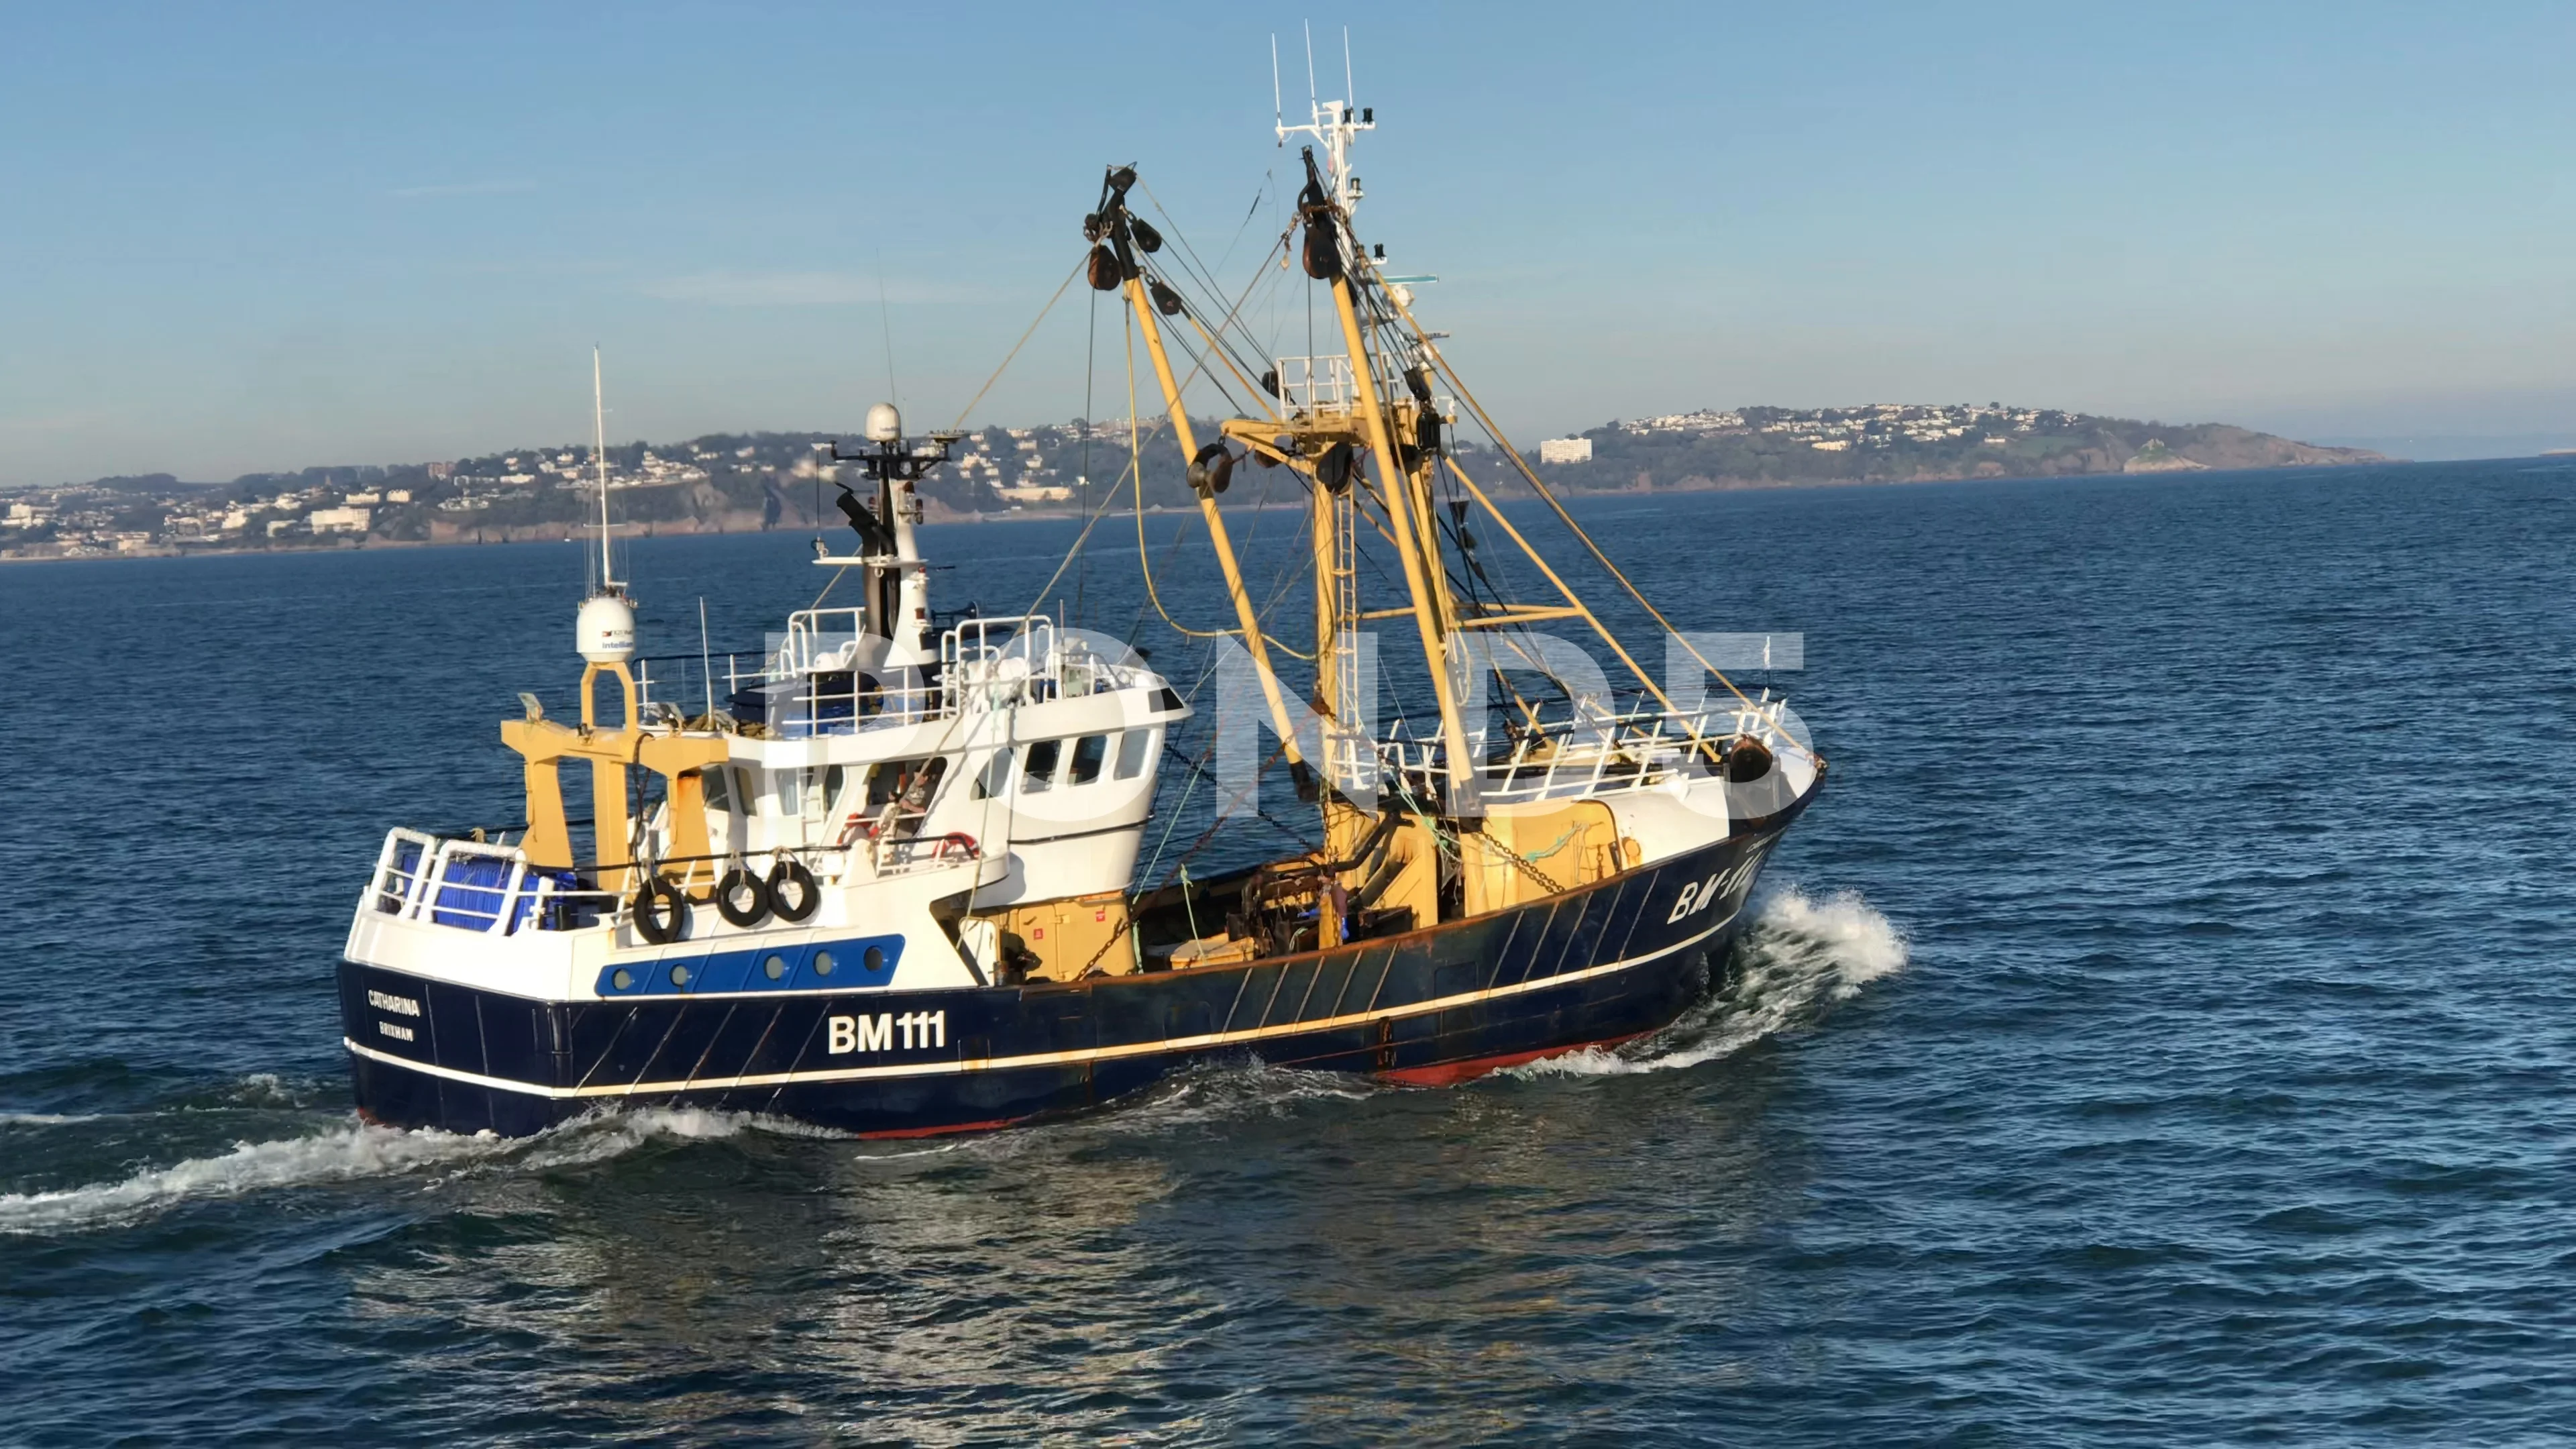 Trawler leaving Brixham Harbor - 4K, Stock Video